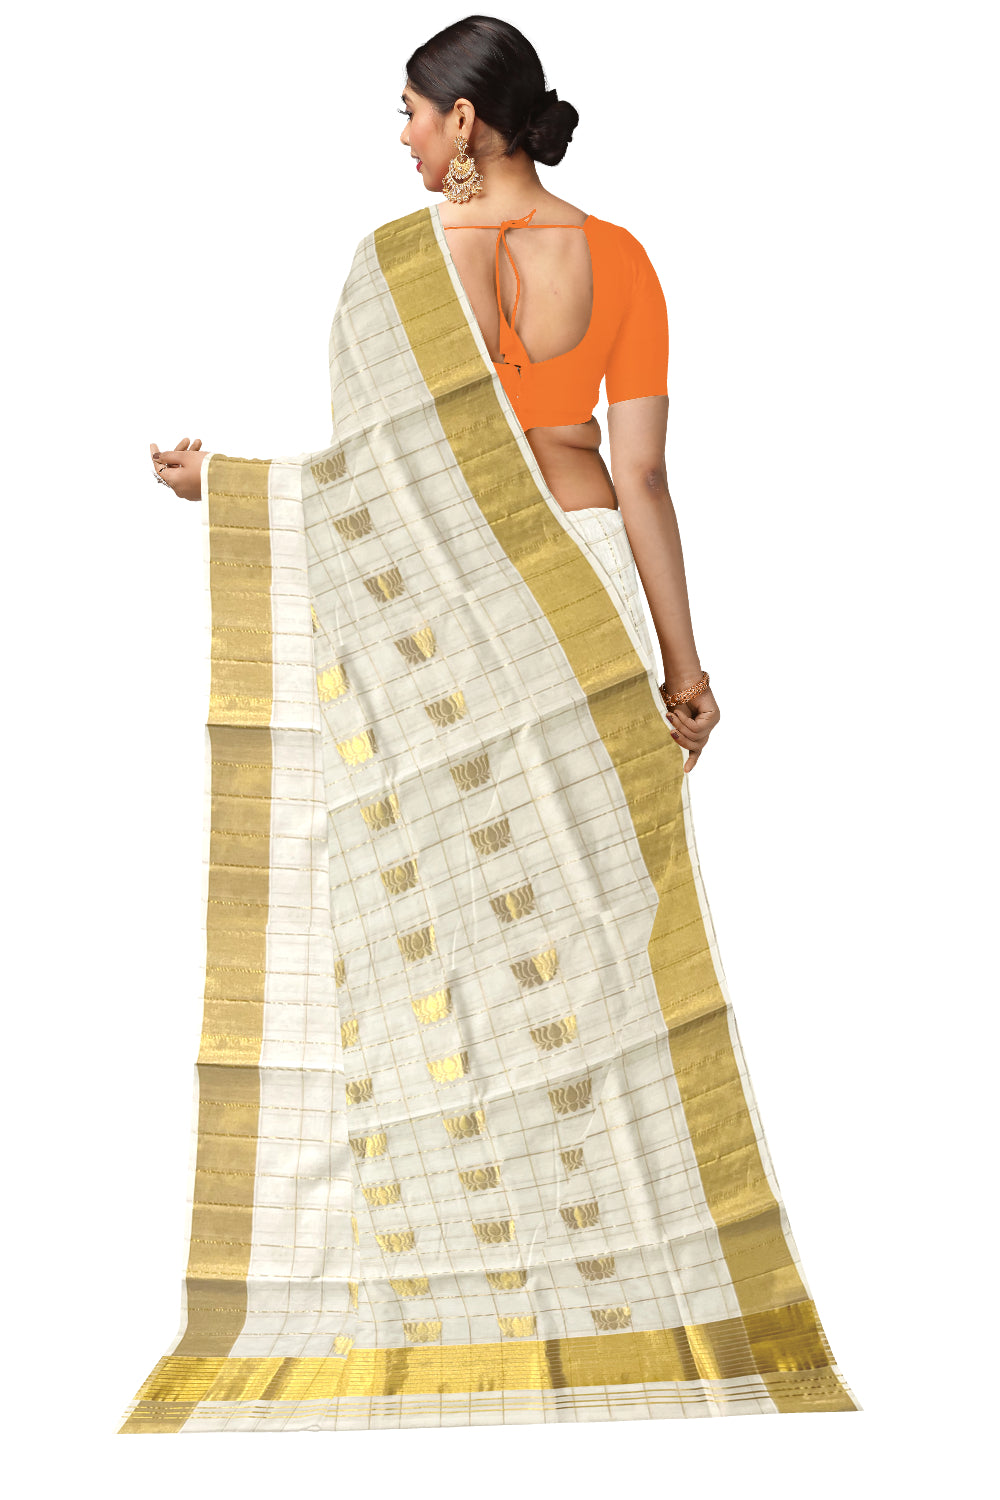 Southloom™ Premium Handloom Check Design Kerala Saree with Kasavu Lotus Woven Works